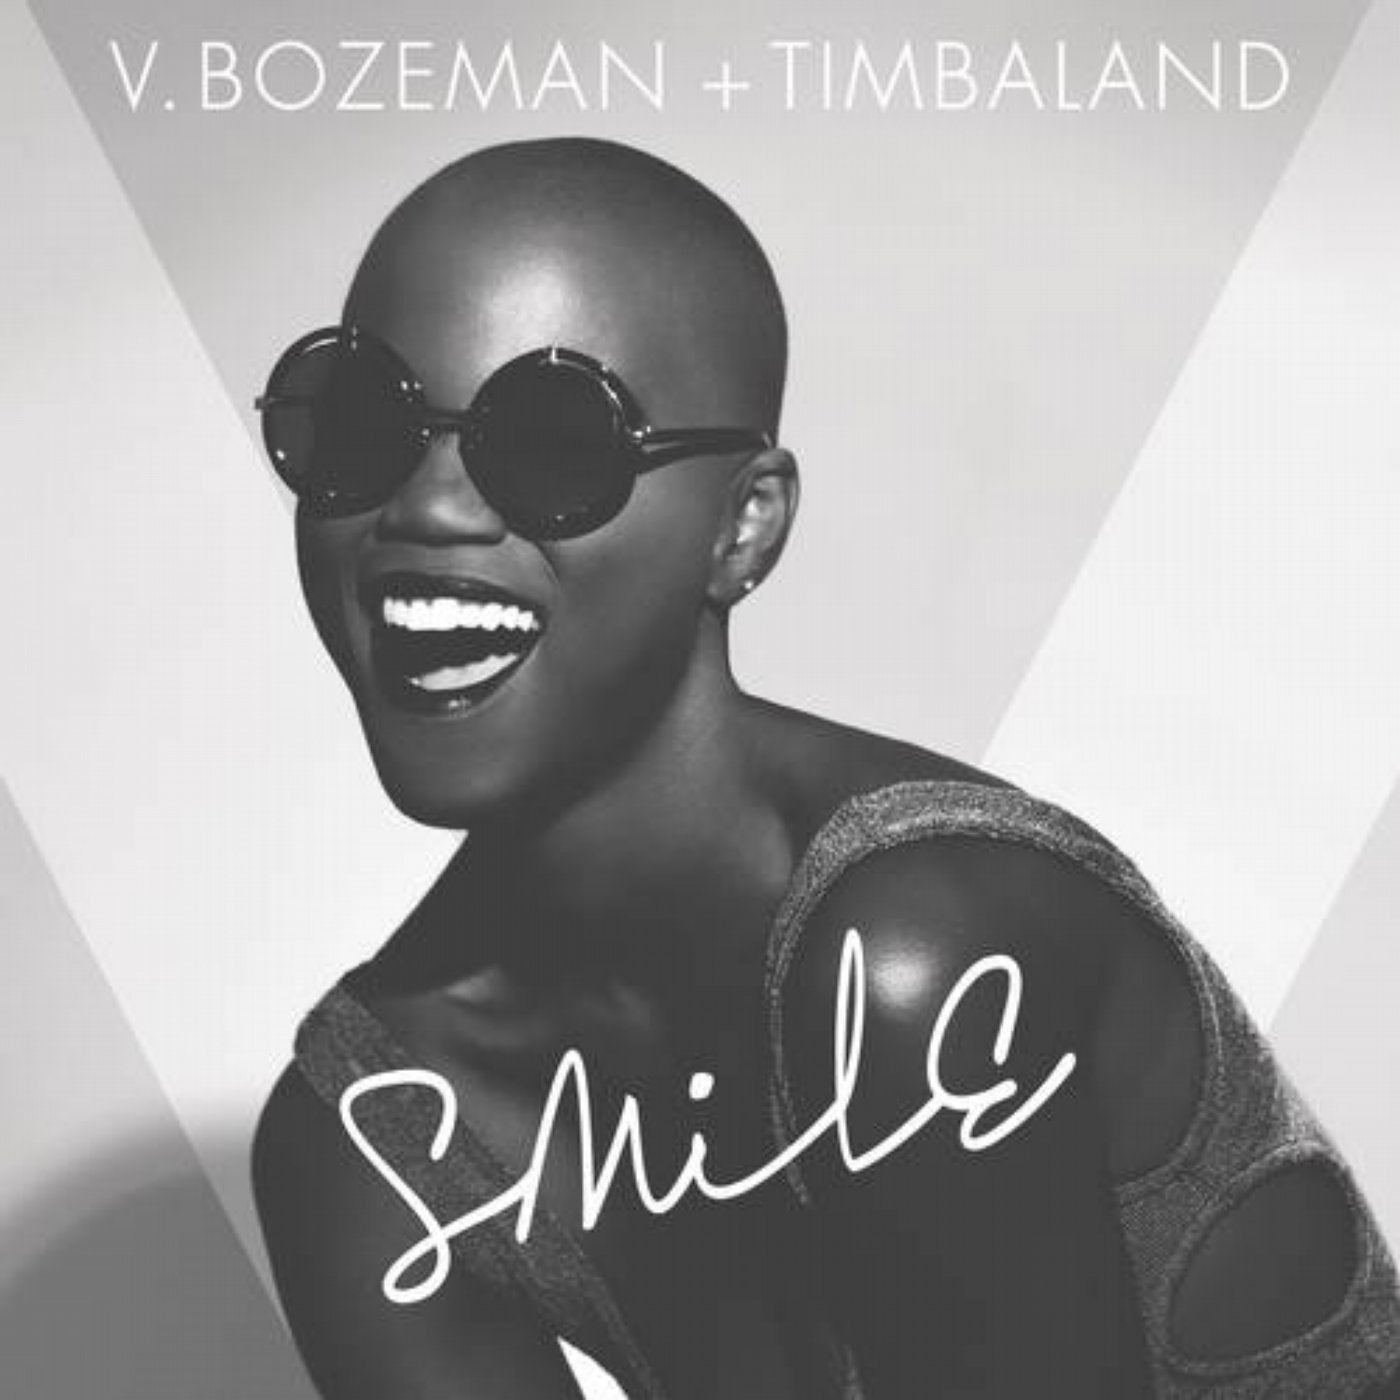 Wanna mmm песня. L.V. певец. M1v исполнитель. Gsmile певец. Timbaland улыбка.